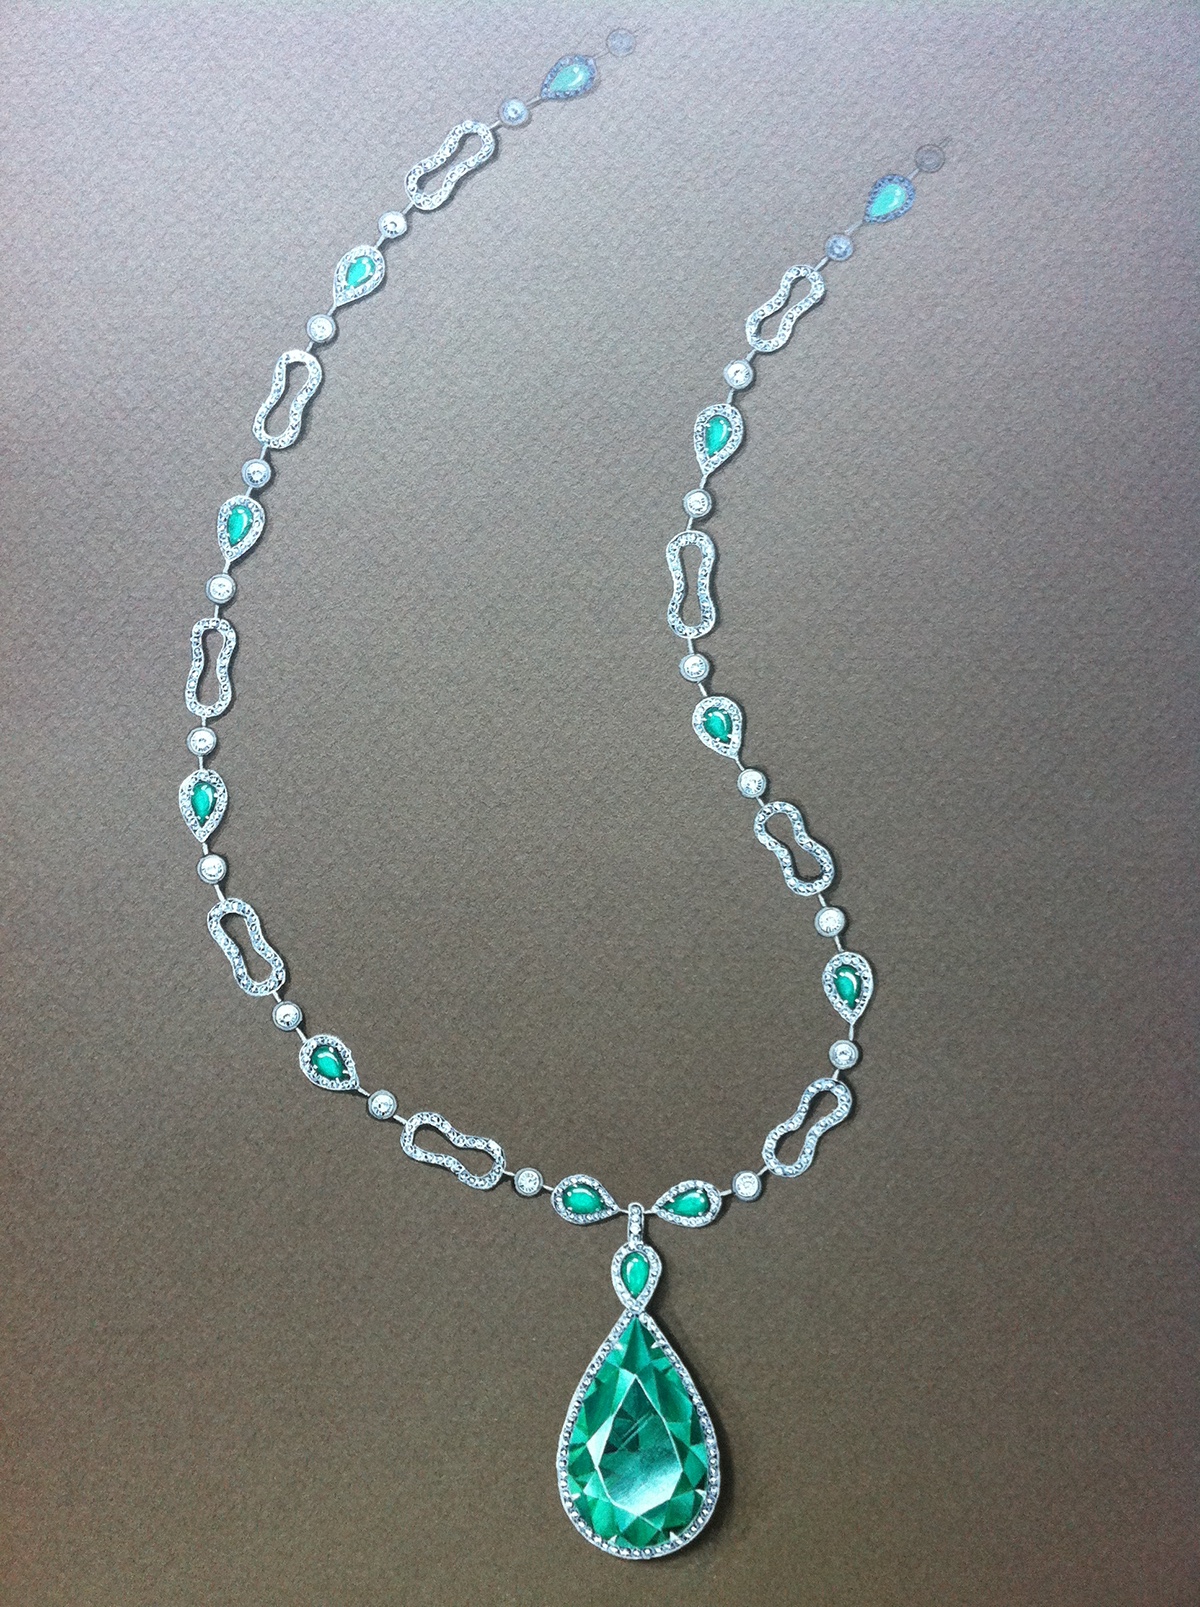 Necklace  emerald jewelry design Illustation